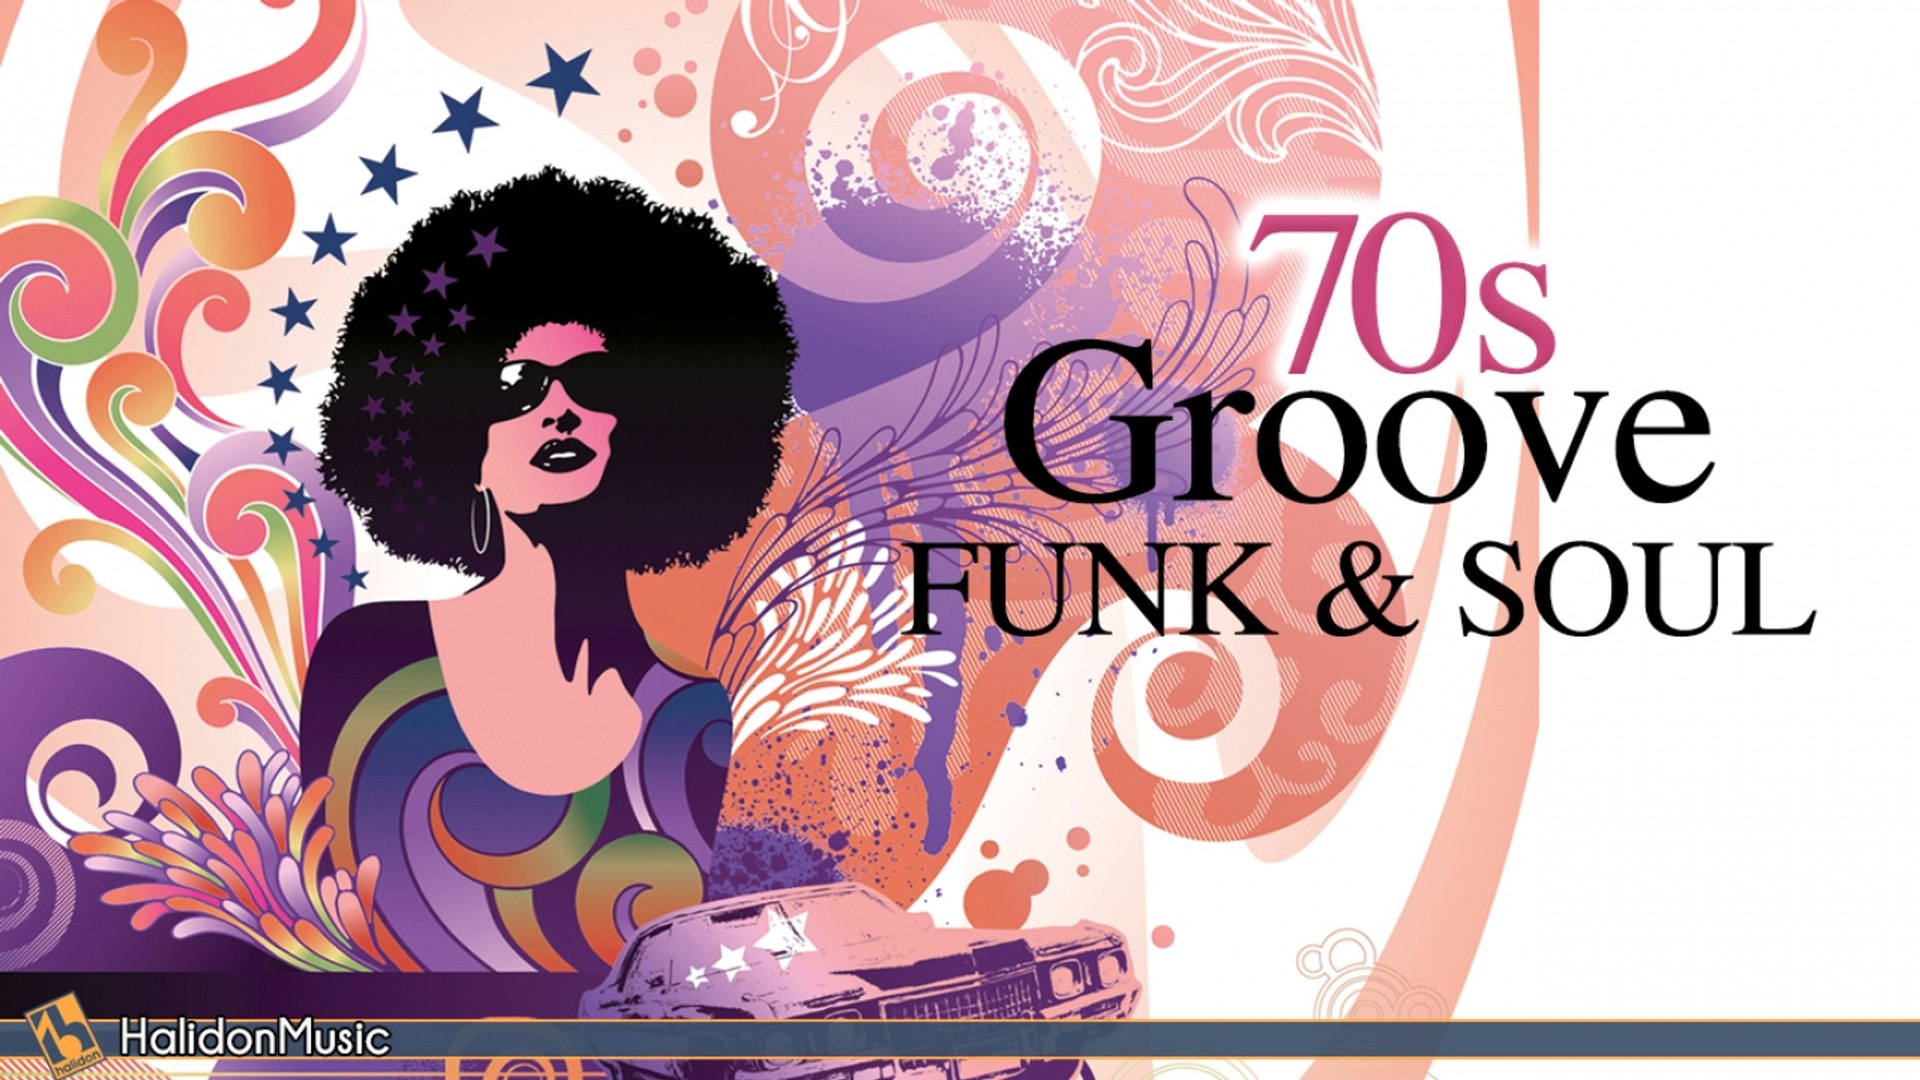 Soft blade yougoslavskiy groove funk от kirushi. Afro Funk. Funk Groove. Disco Funk. Soul Funk.